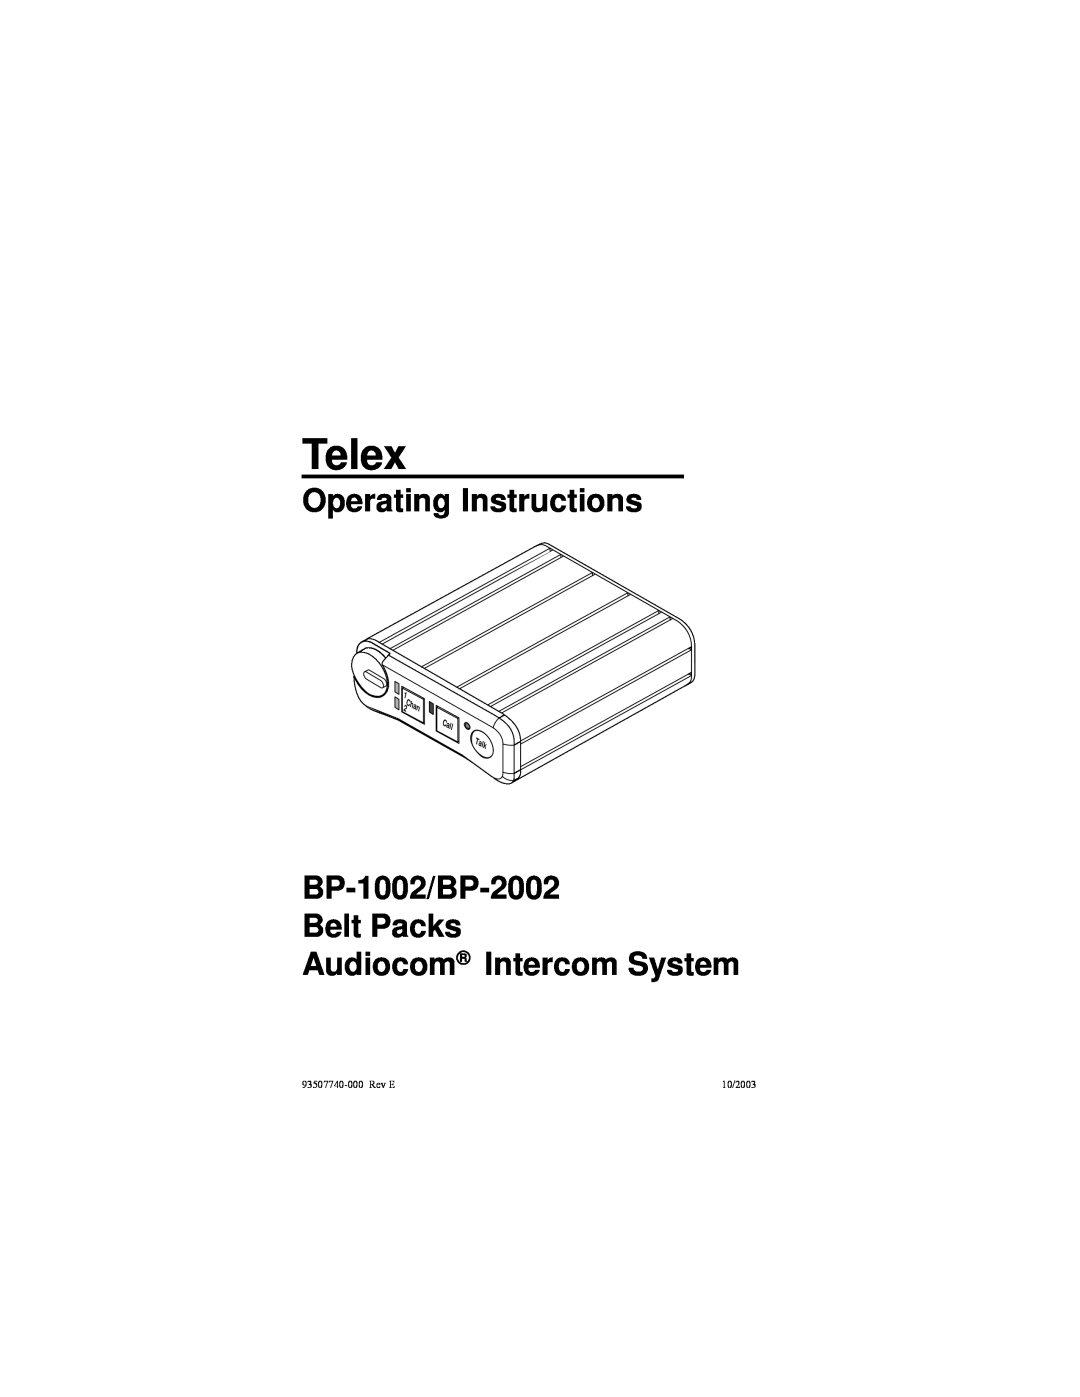 Telex operating instructions Telex, Operating Instructions, BP-1002/BP-2002 Belt Packs Audiocom Intercom System, Rev E 